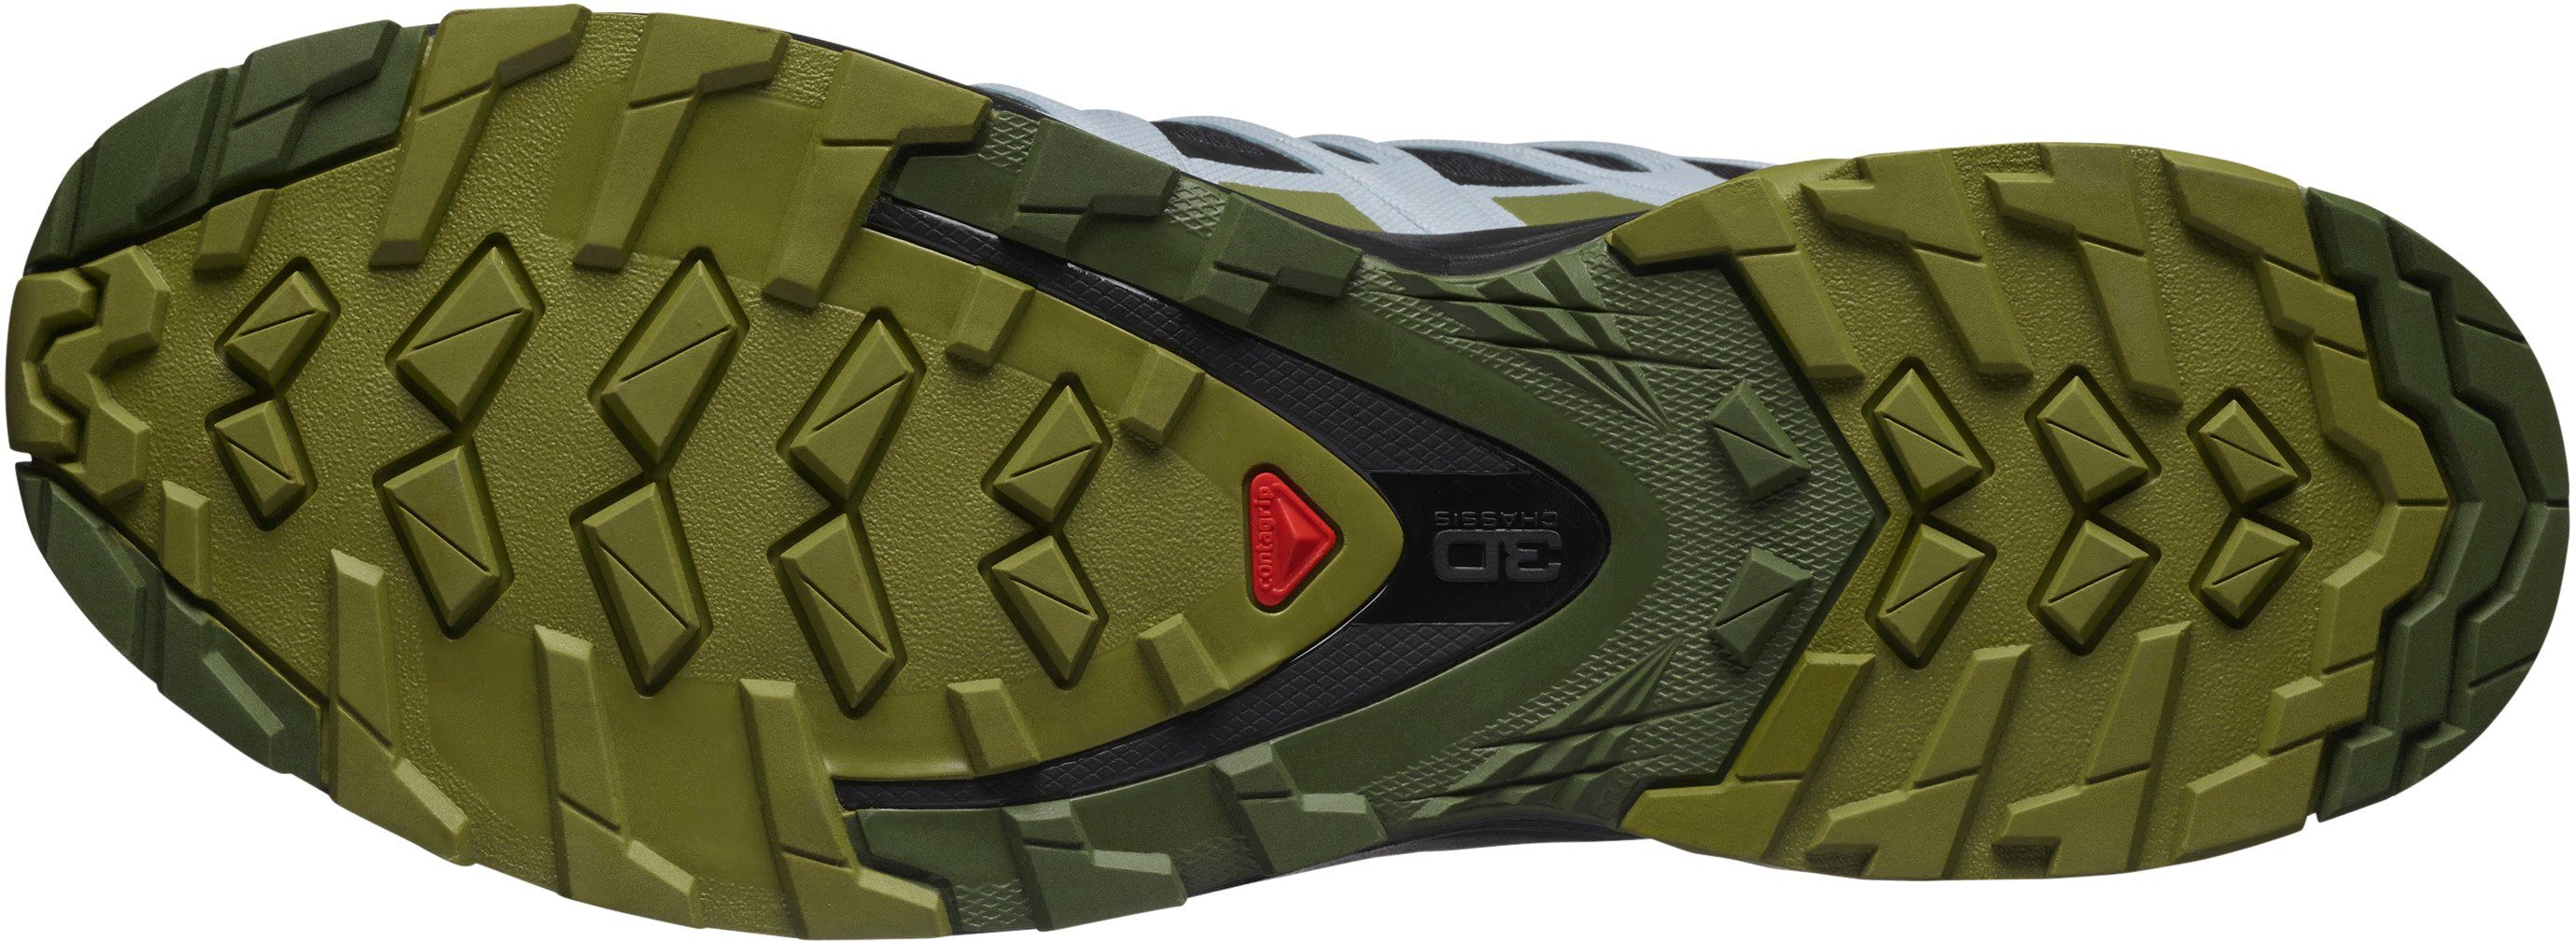 Salomon XA PRO 3D W v8 schwarz-grün Trailrunningschuh wasserdicht GORE-TEX®